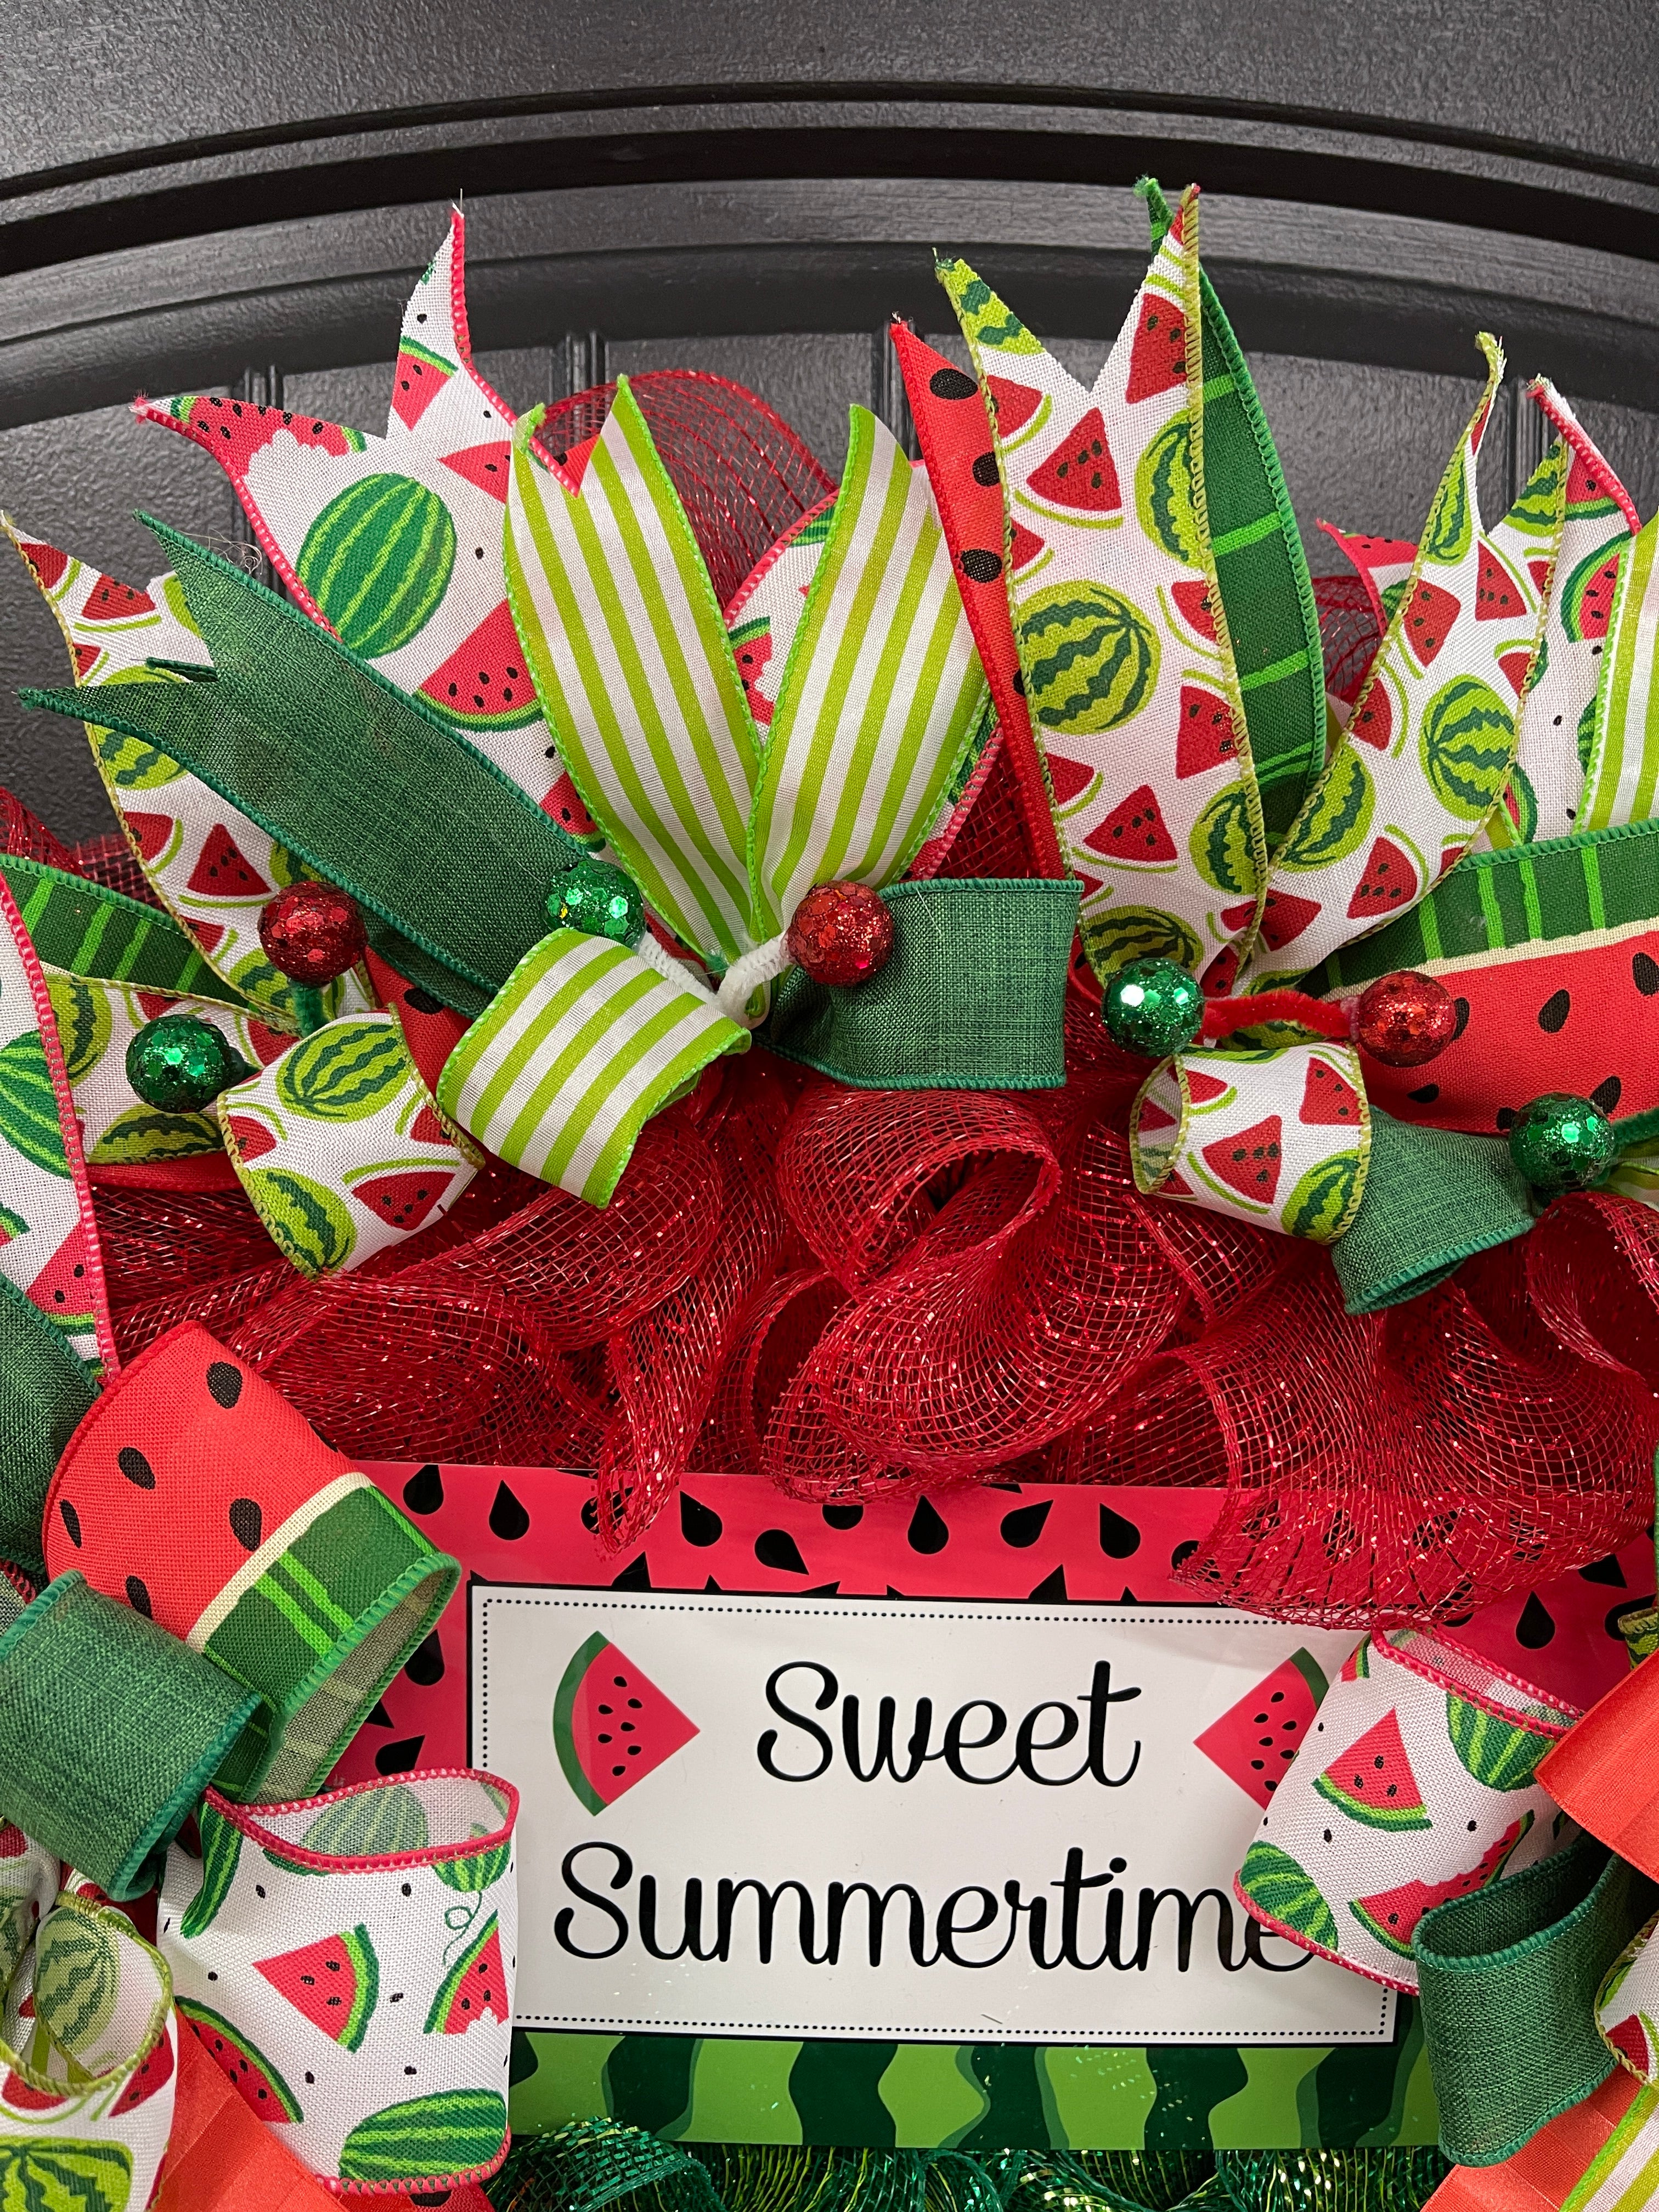 Sweet Summertime Watermelon Wreath, KatsCreationsNMore